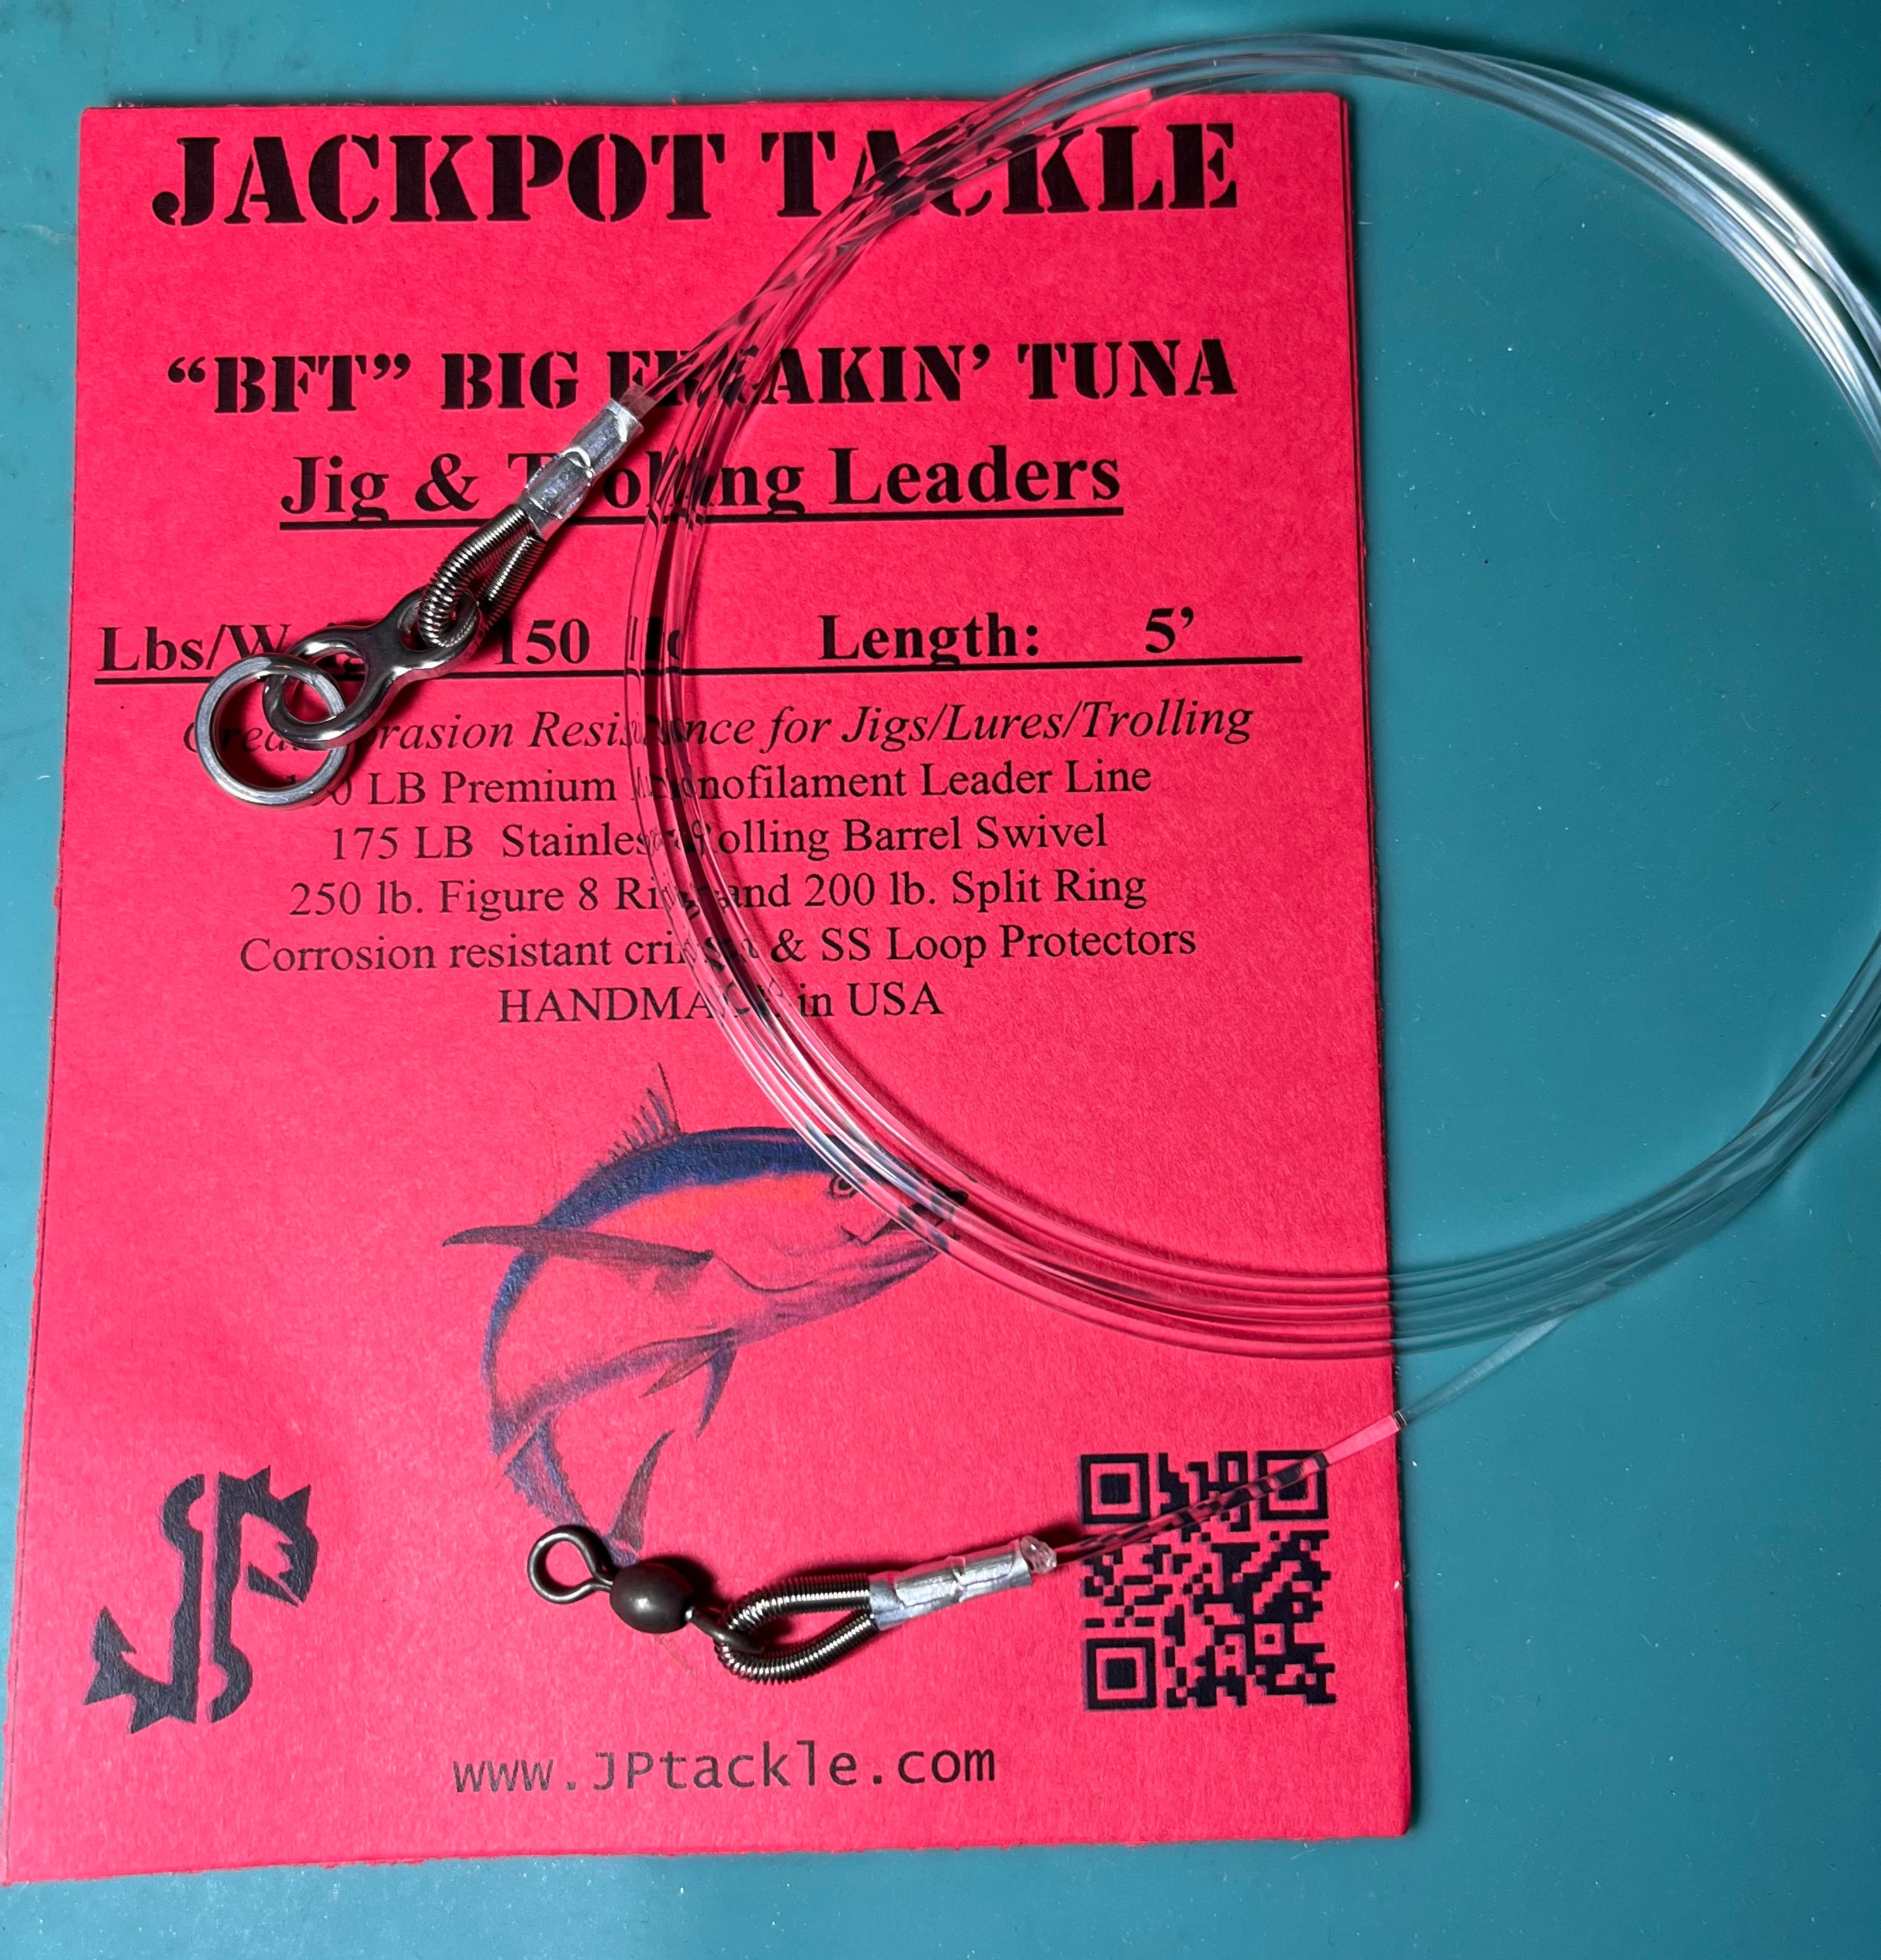 BFT” 200 lb. 5' Big Freakin' Tuna Jig/Lure Leaders (2 Pack) – Jackpot Tackle